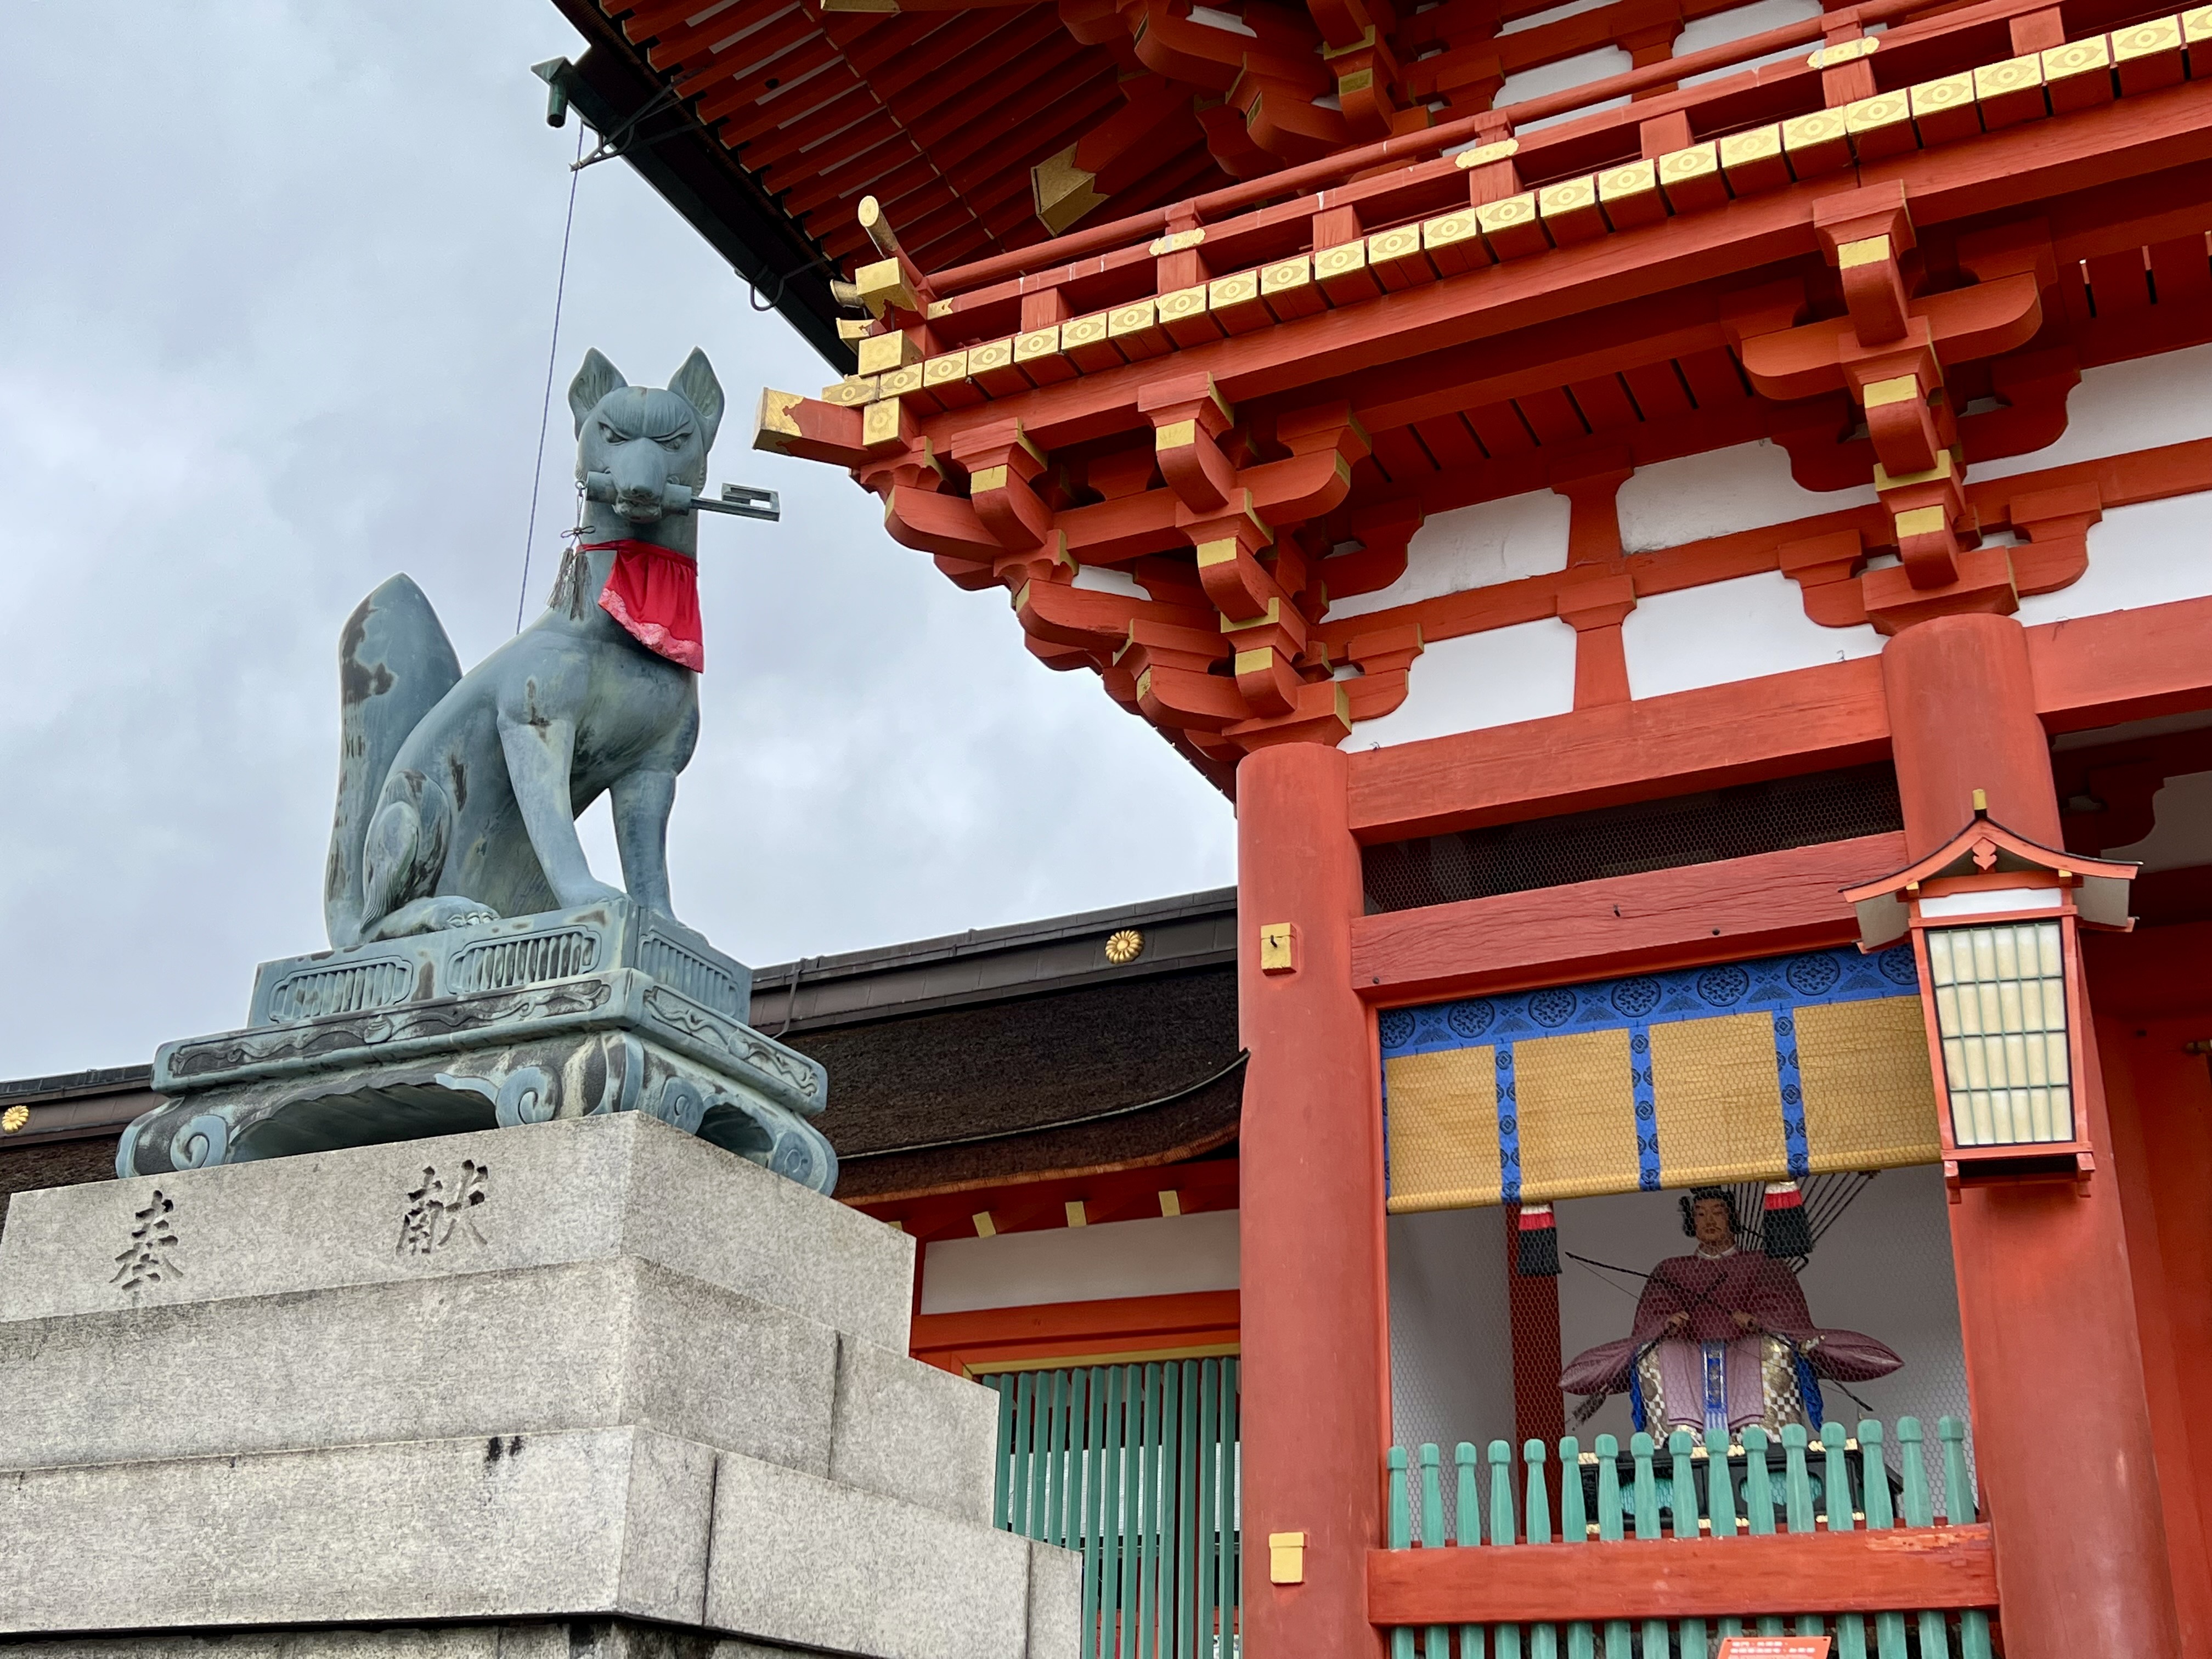 Inari fox guardian holding granary key at Fushimi Grand Shrine.